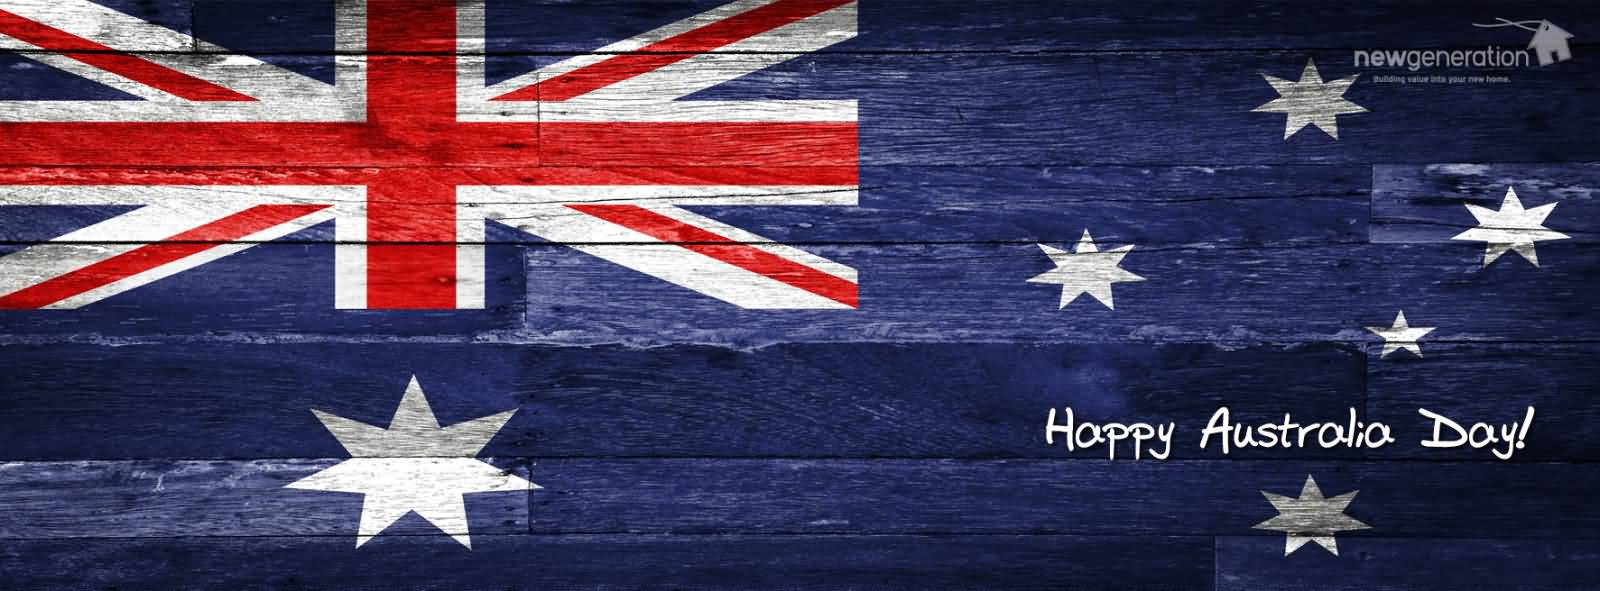 Happy Australia Day Australian Flag Facebook Cover Picture